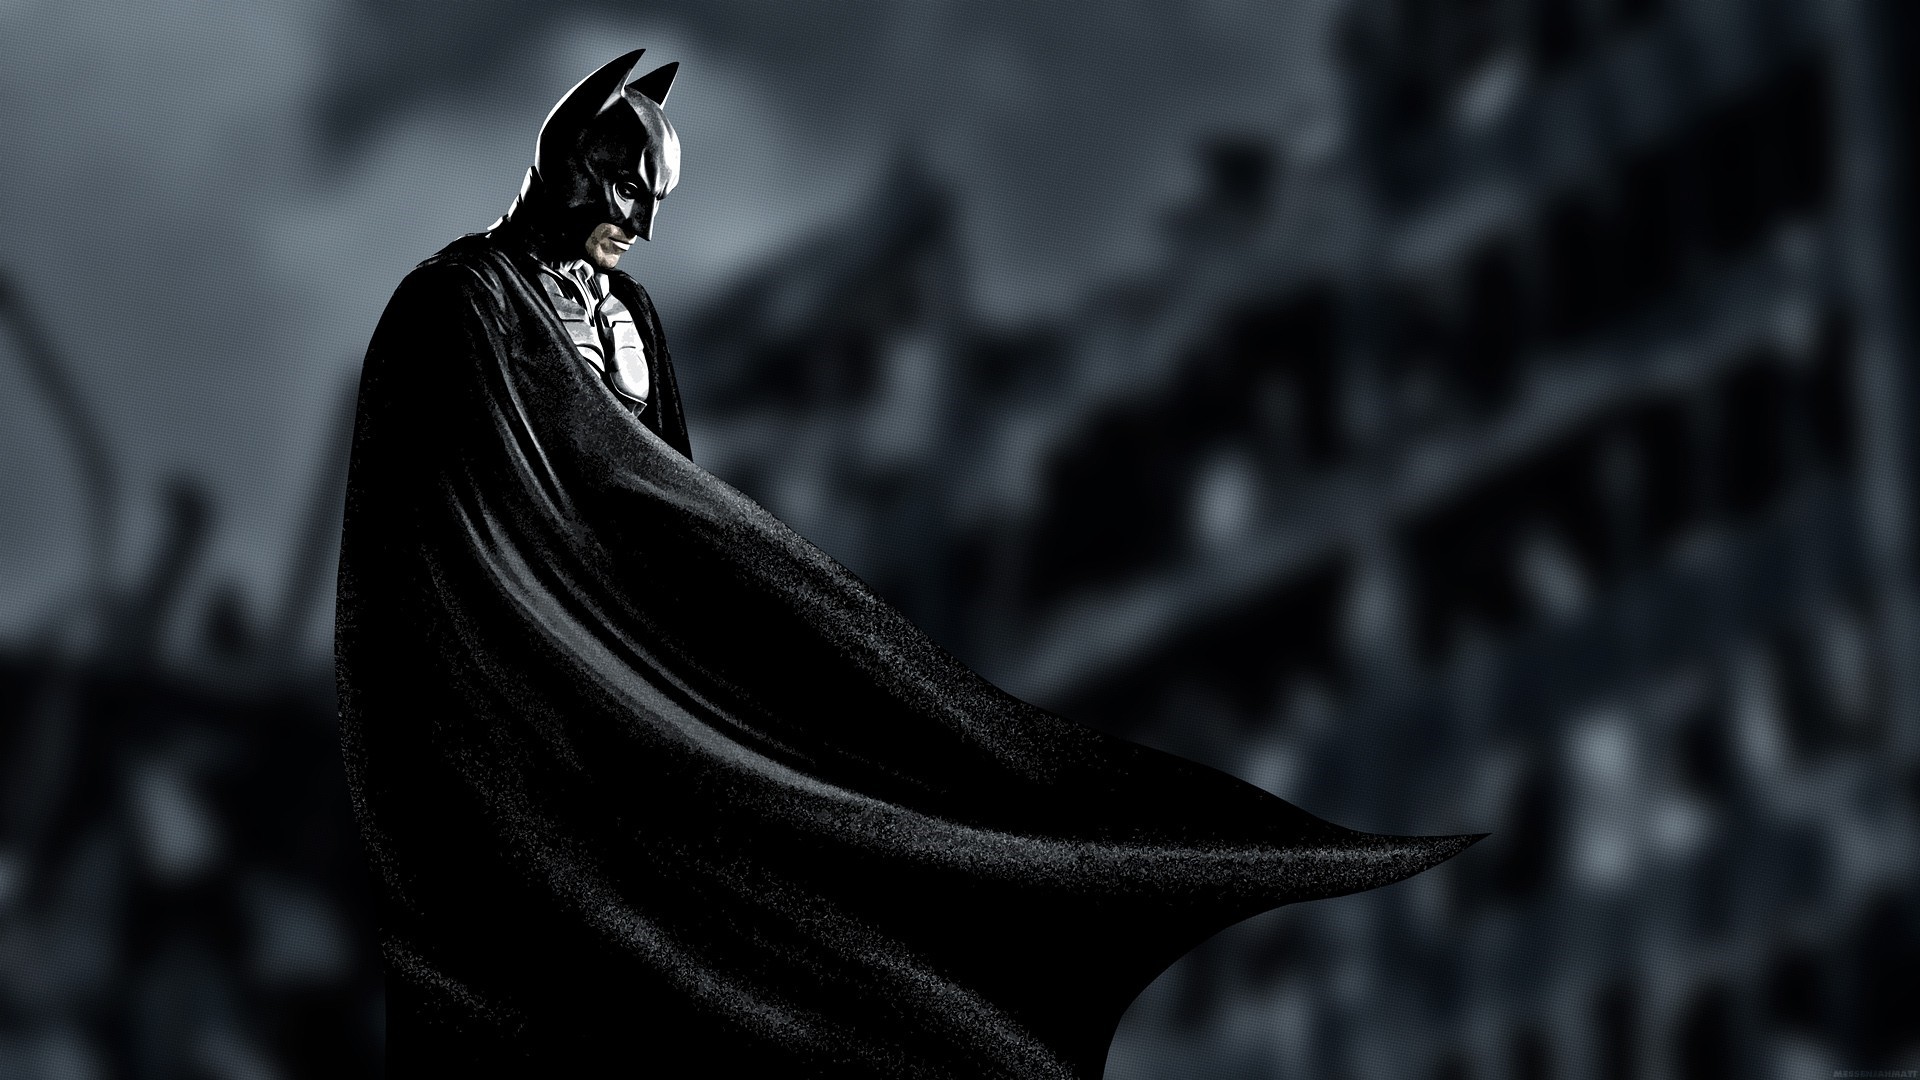 29 Batman Arkham Knight Desktop Wallpapers  WallpaperSafari